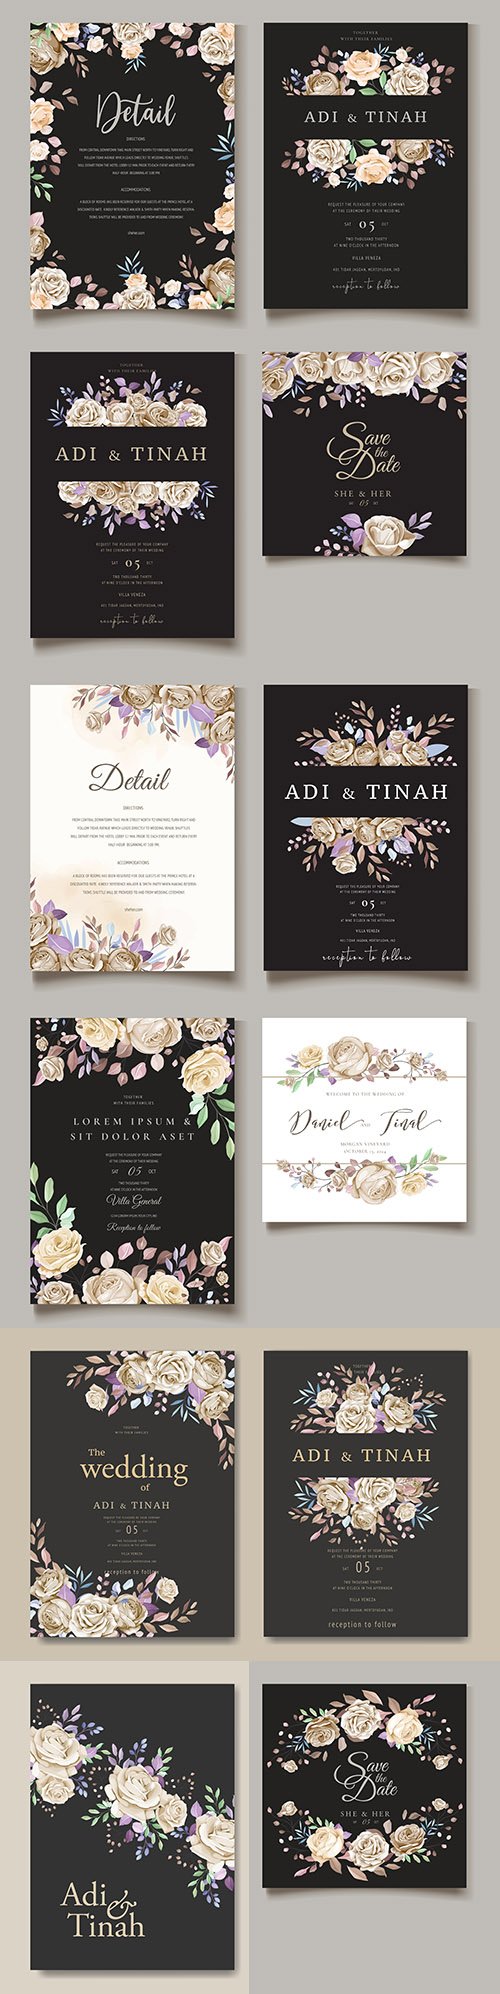 Elegant wedding invitation design with flowers